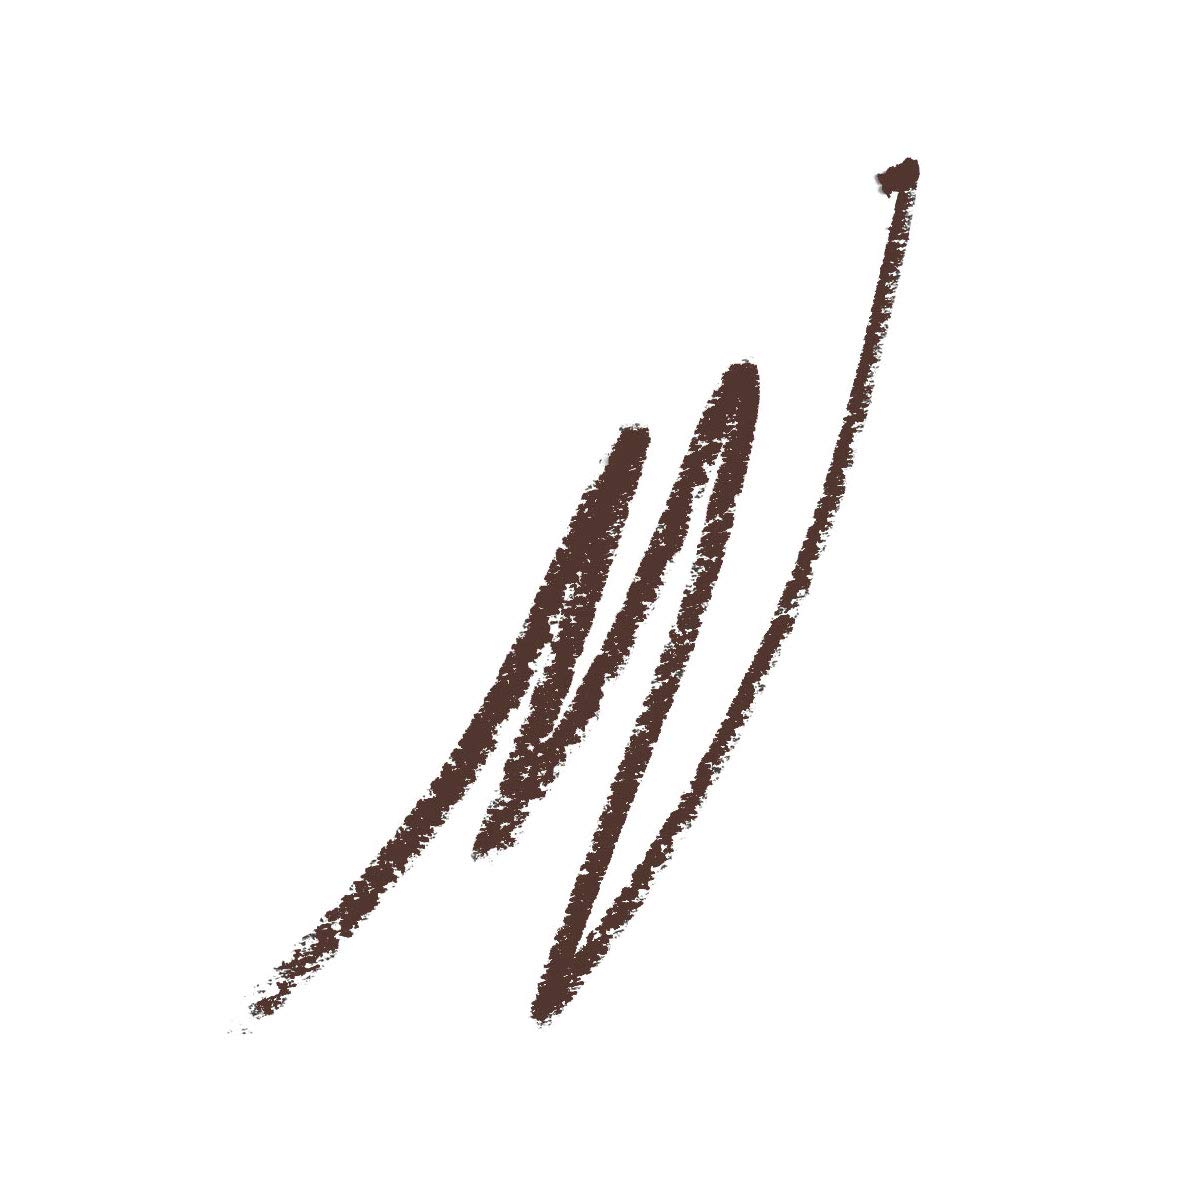 Gentlehomme Mens Eyebrow Pencil Dark Brown, Easily Shape Define Fill Eyebrows and Beard, 2 in 1 brush and ultra-thin pencil, Waterproof Smudge Proof Sweatproof, Durable and Long Lasting (Dark Brown)